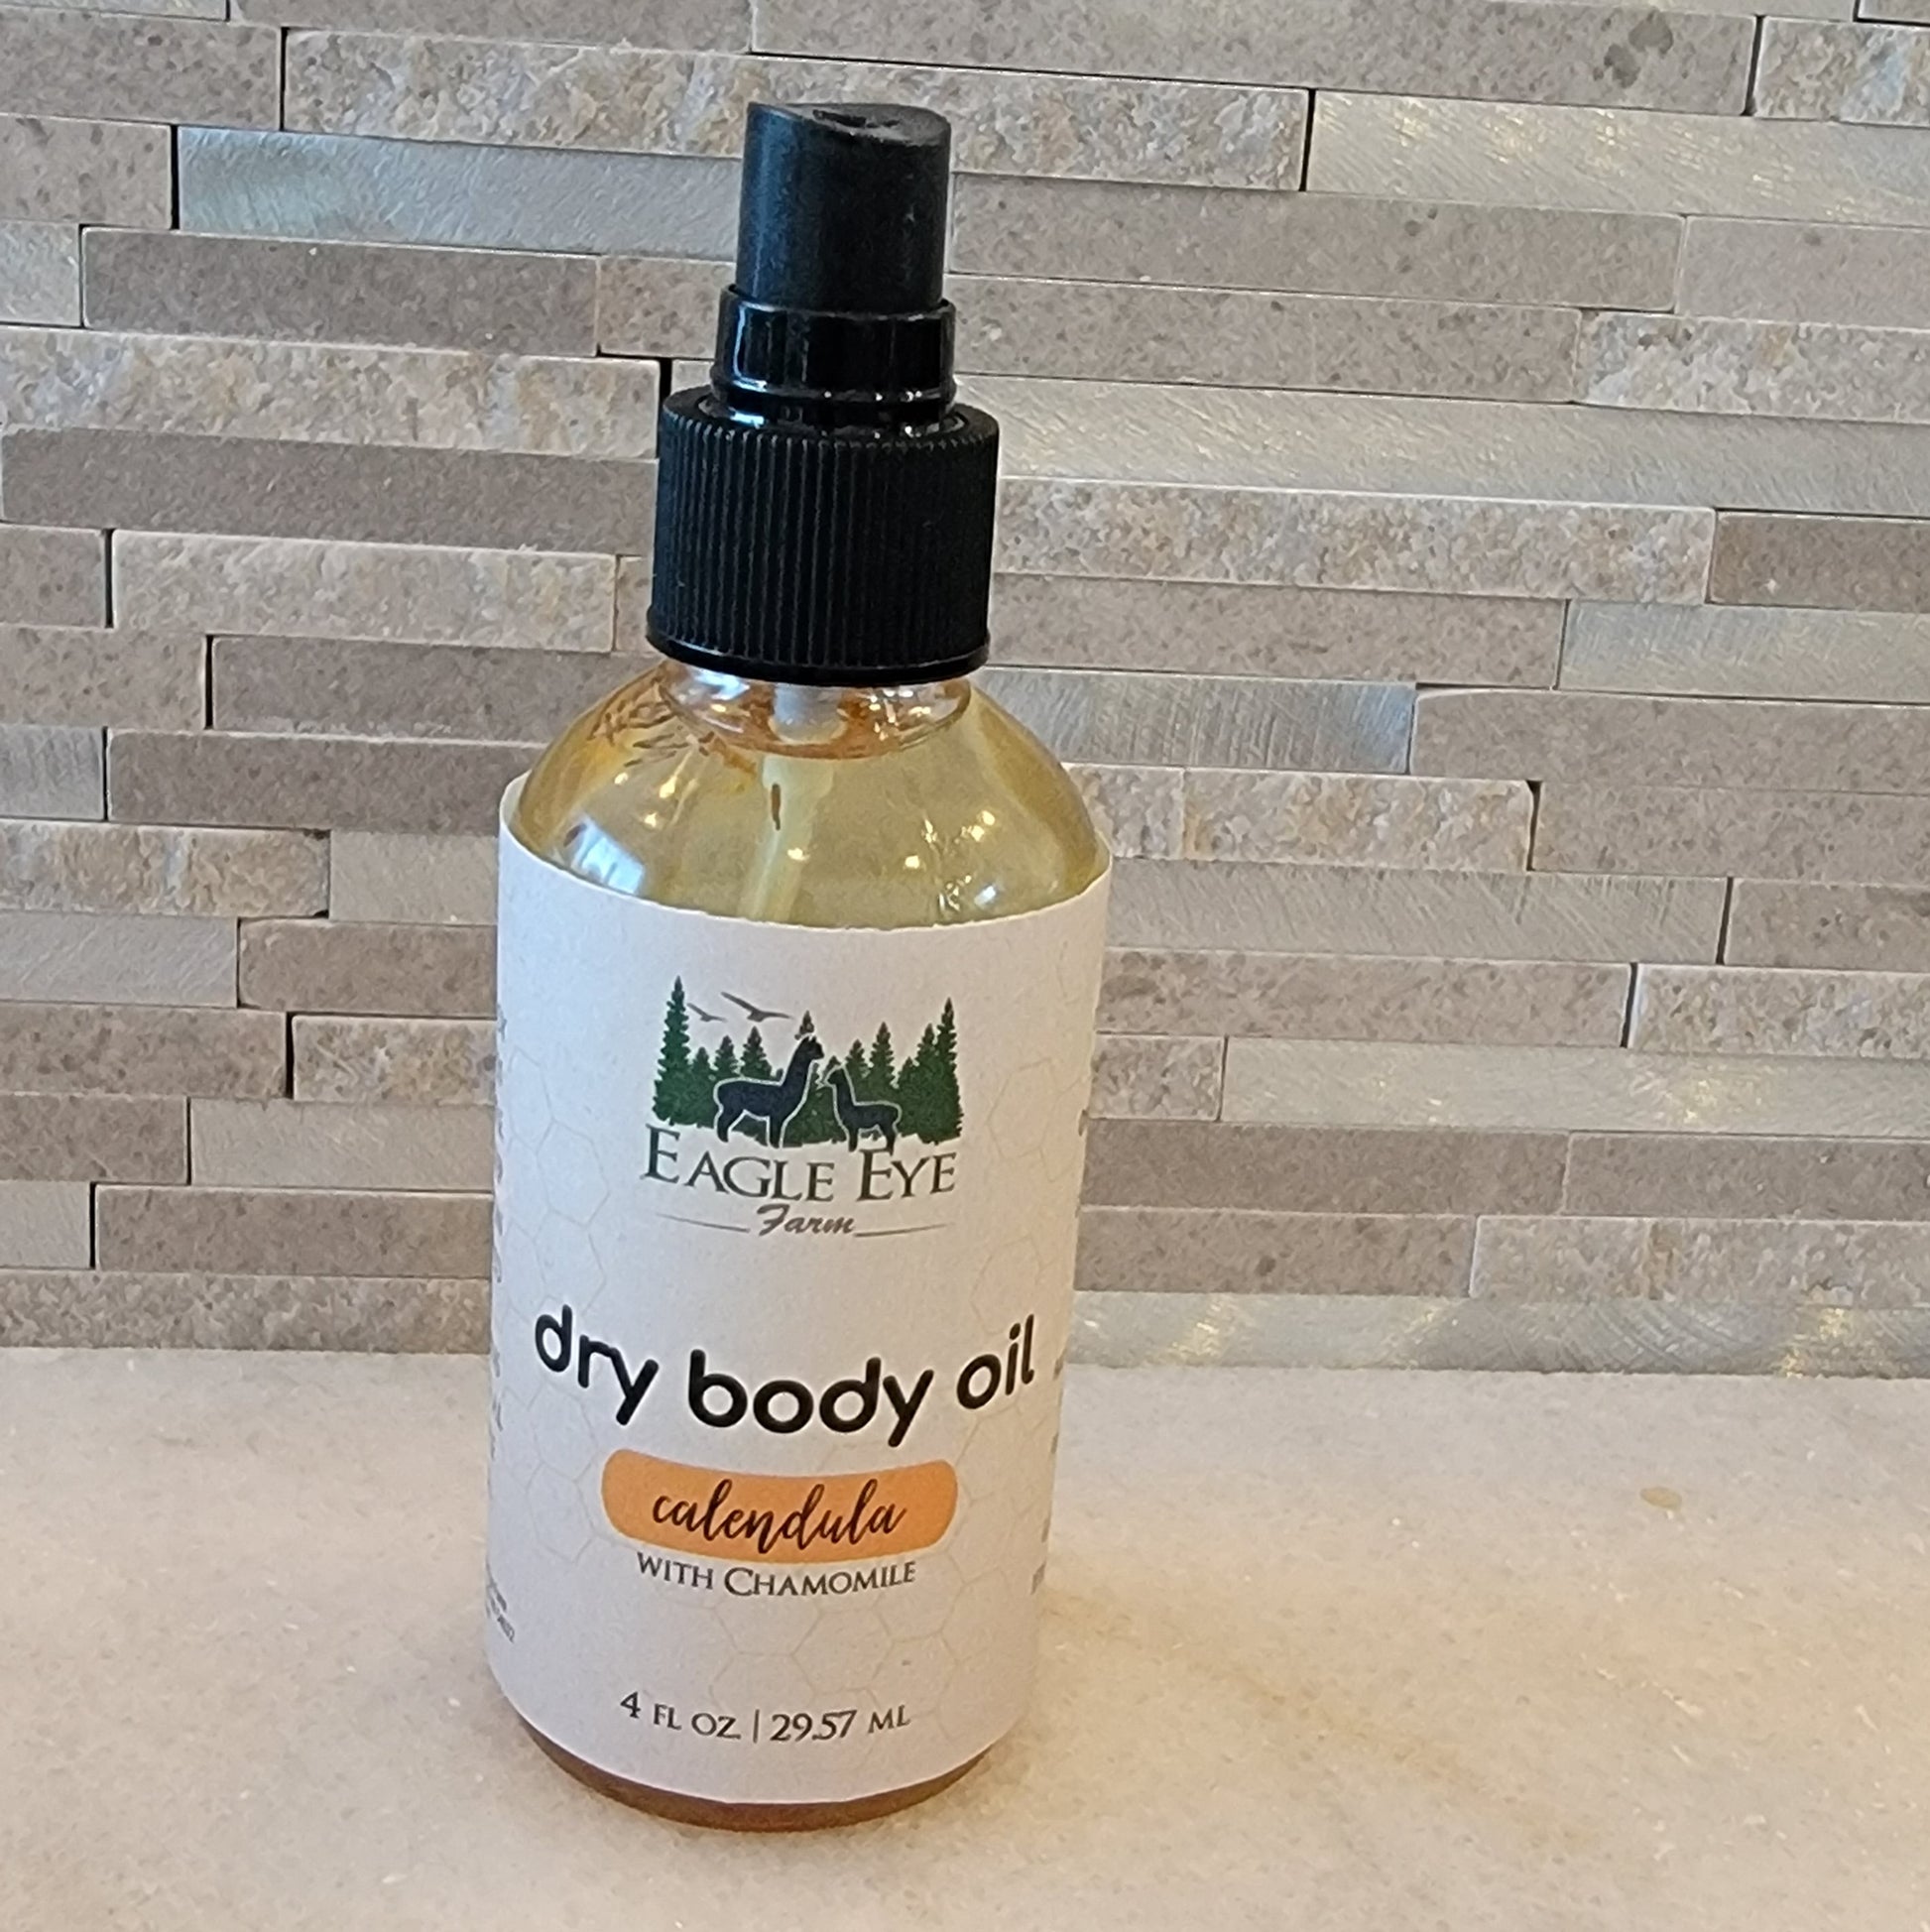 Dry Body Oil